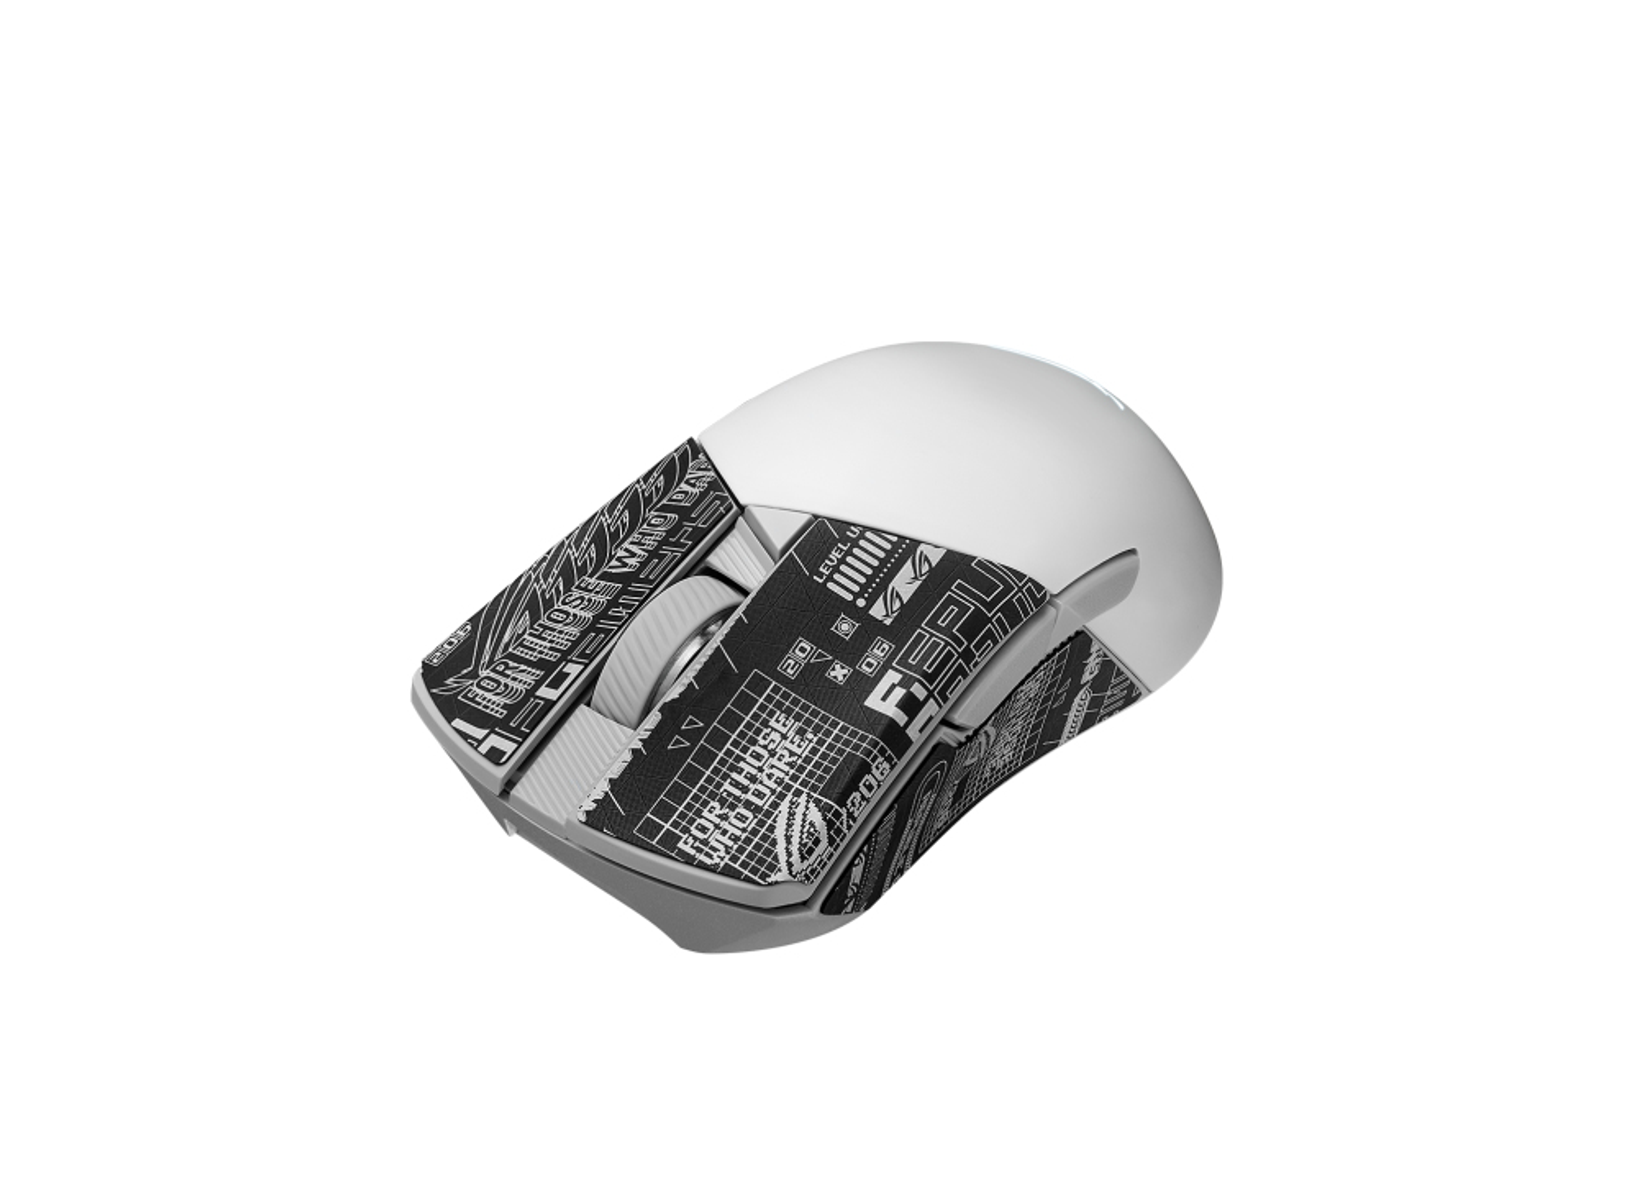 White Gladius Weiß III Wireless ASUS Maus, Aimpoint Gaming